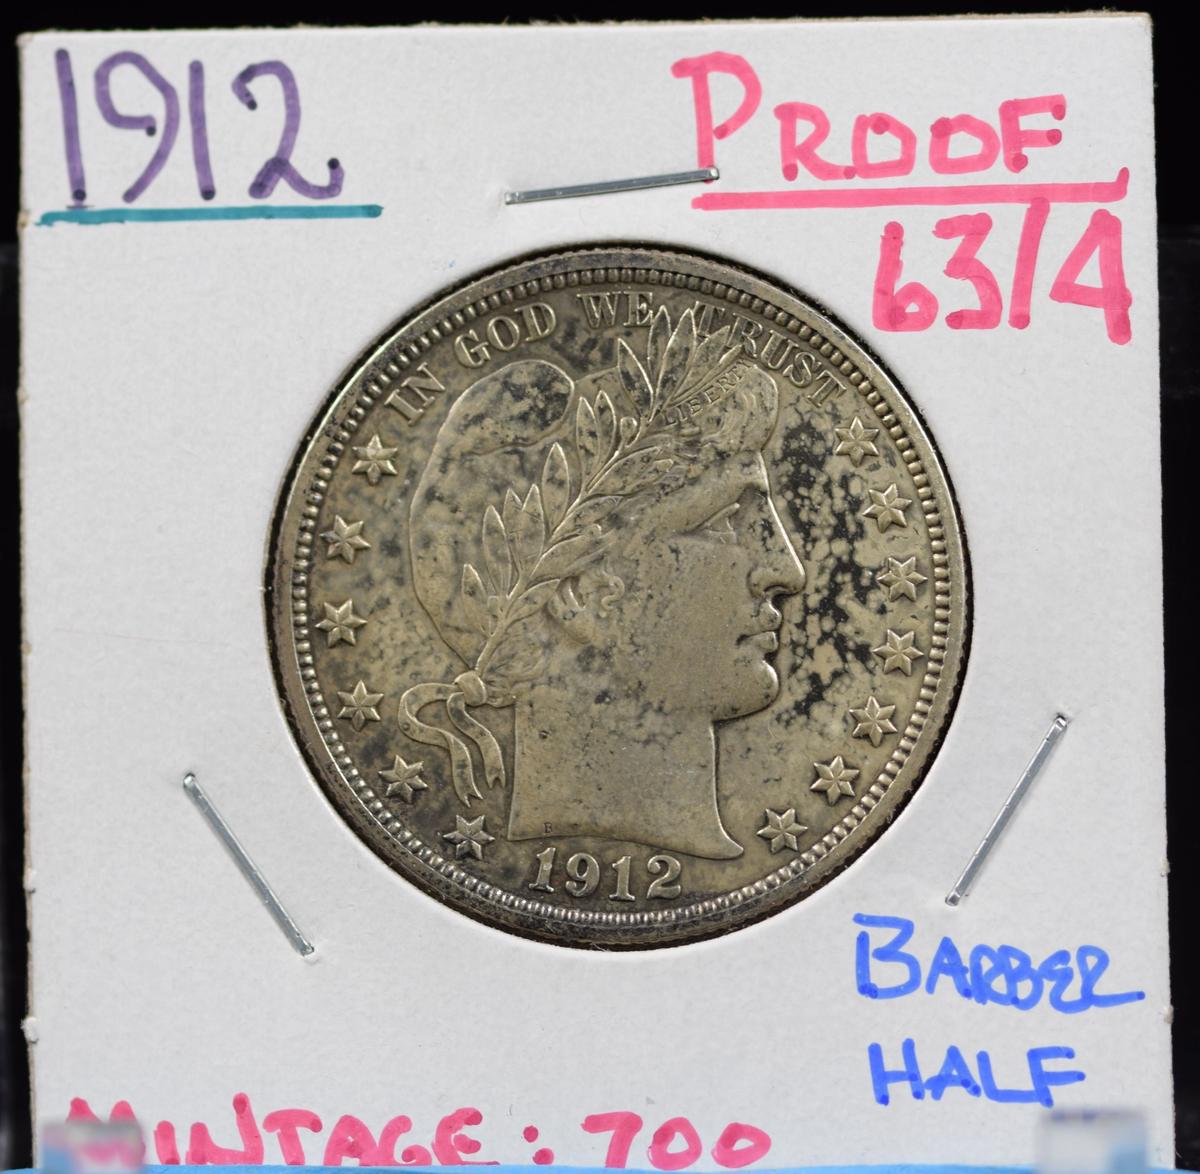 1912 Barber Half Dollar Proof 63/64 Mintage 700